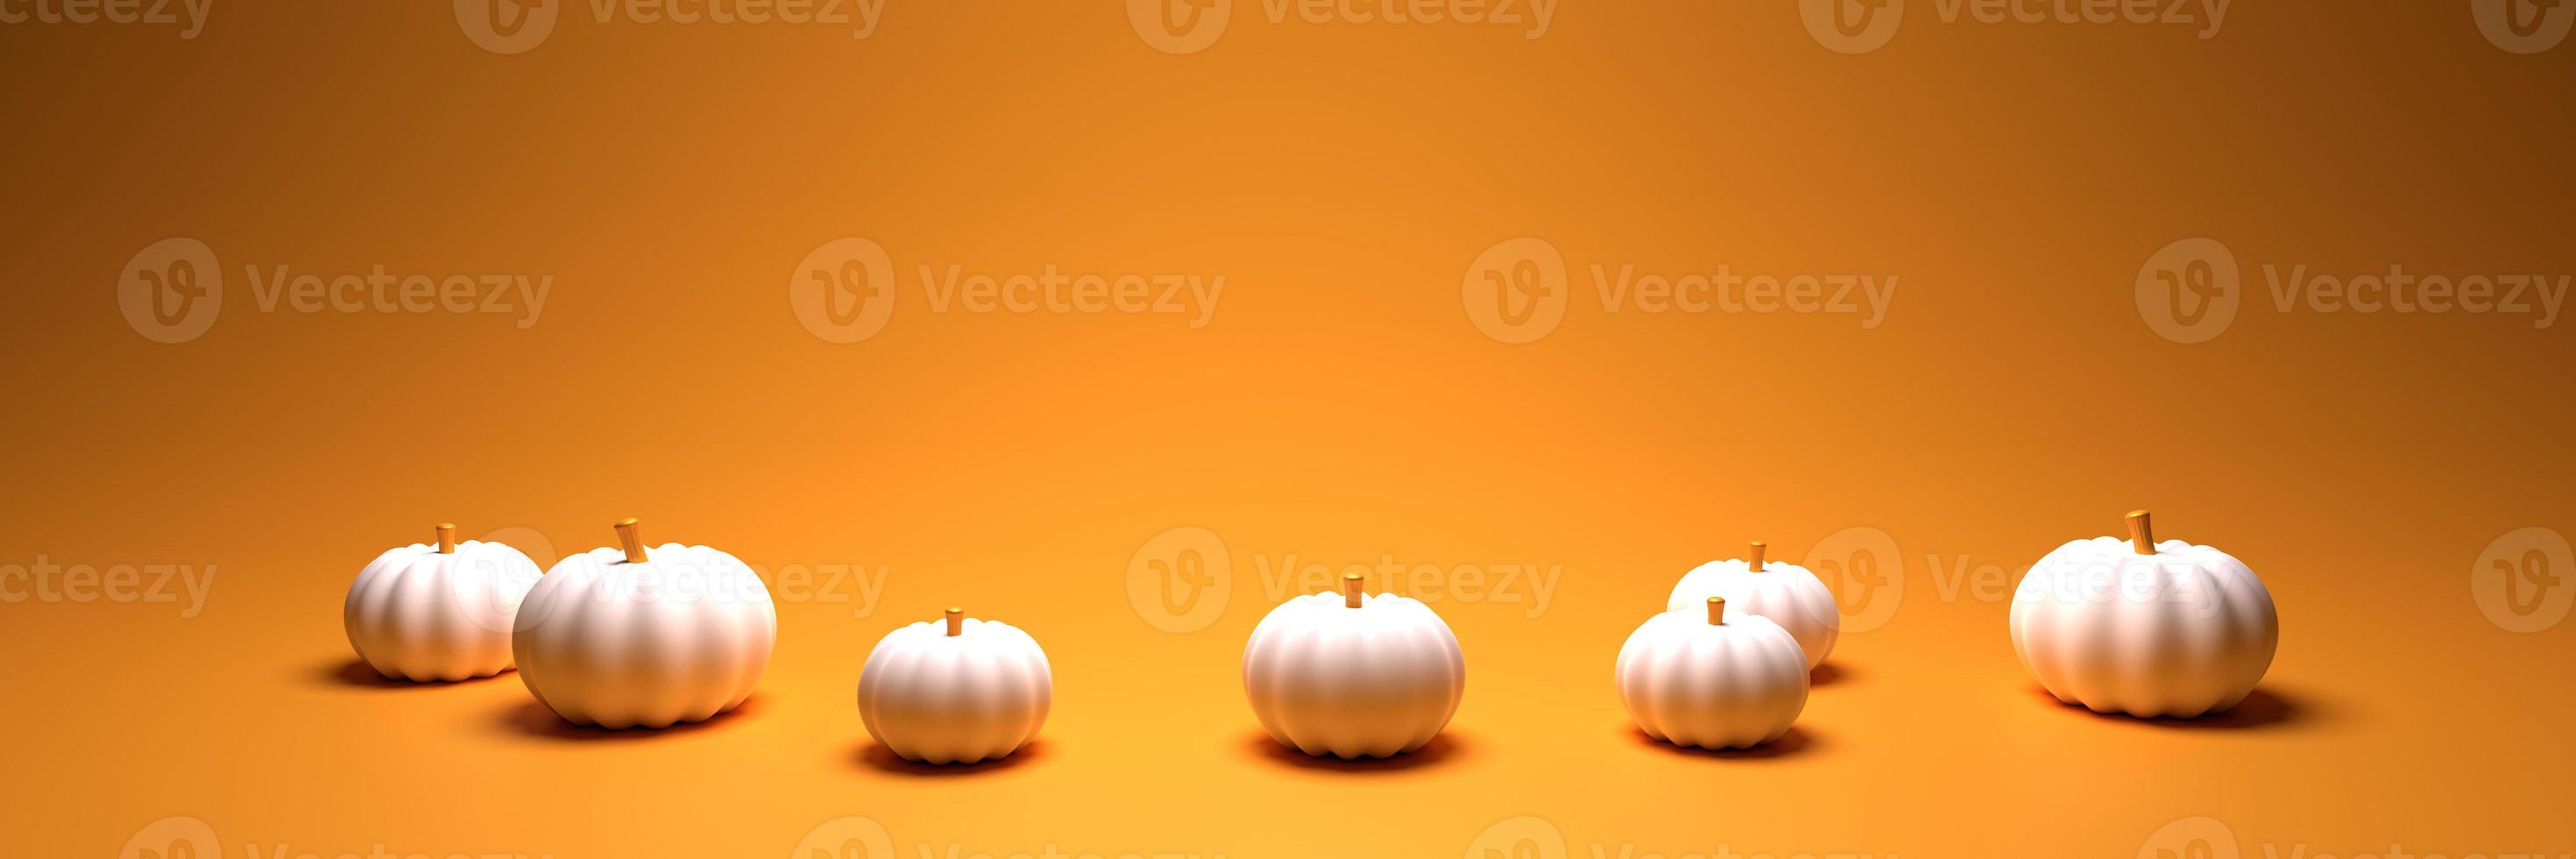 Thanksgiving Halloween banner with white pumpkins. 3d render illustration. photo